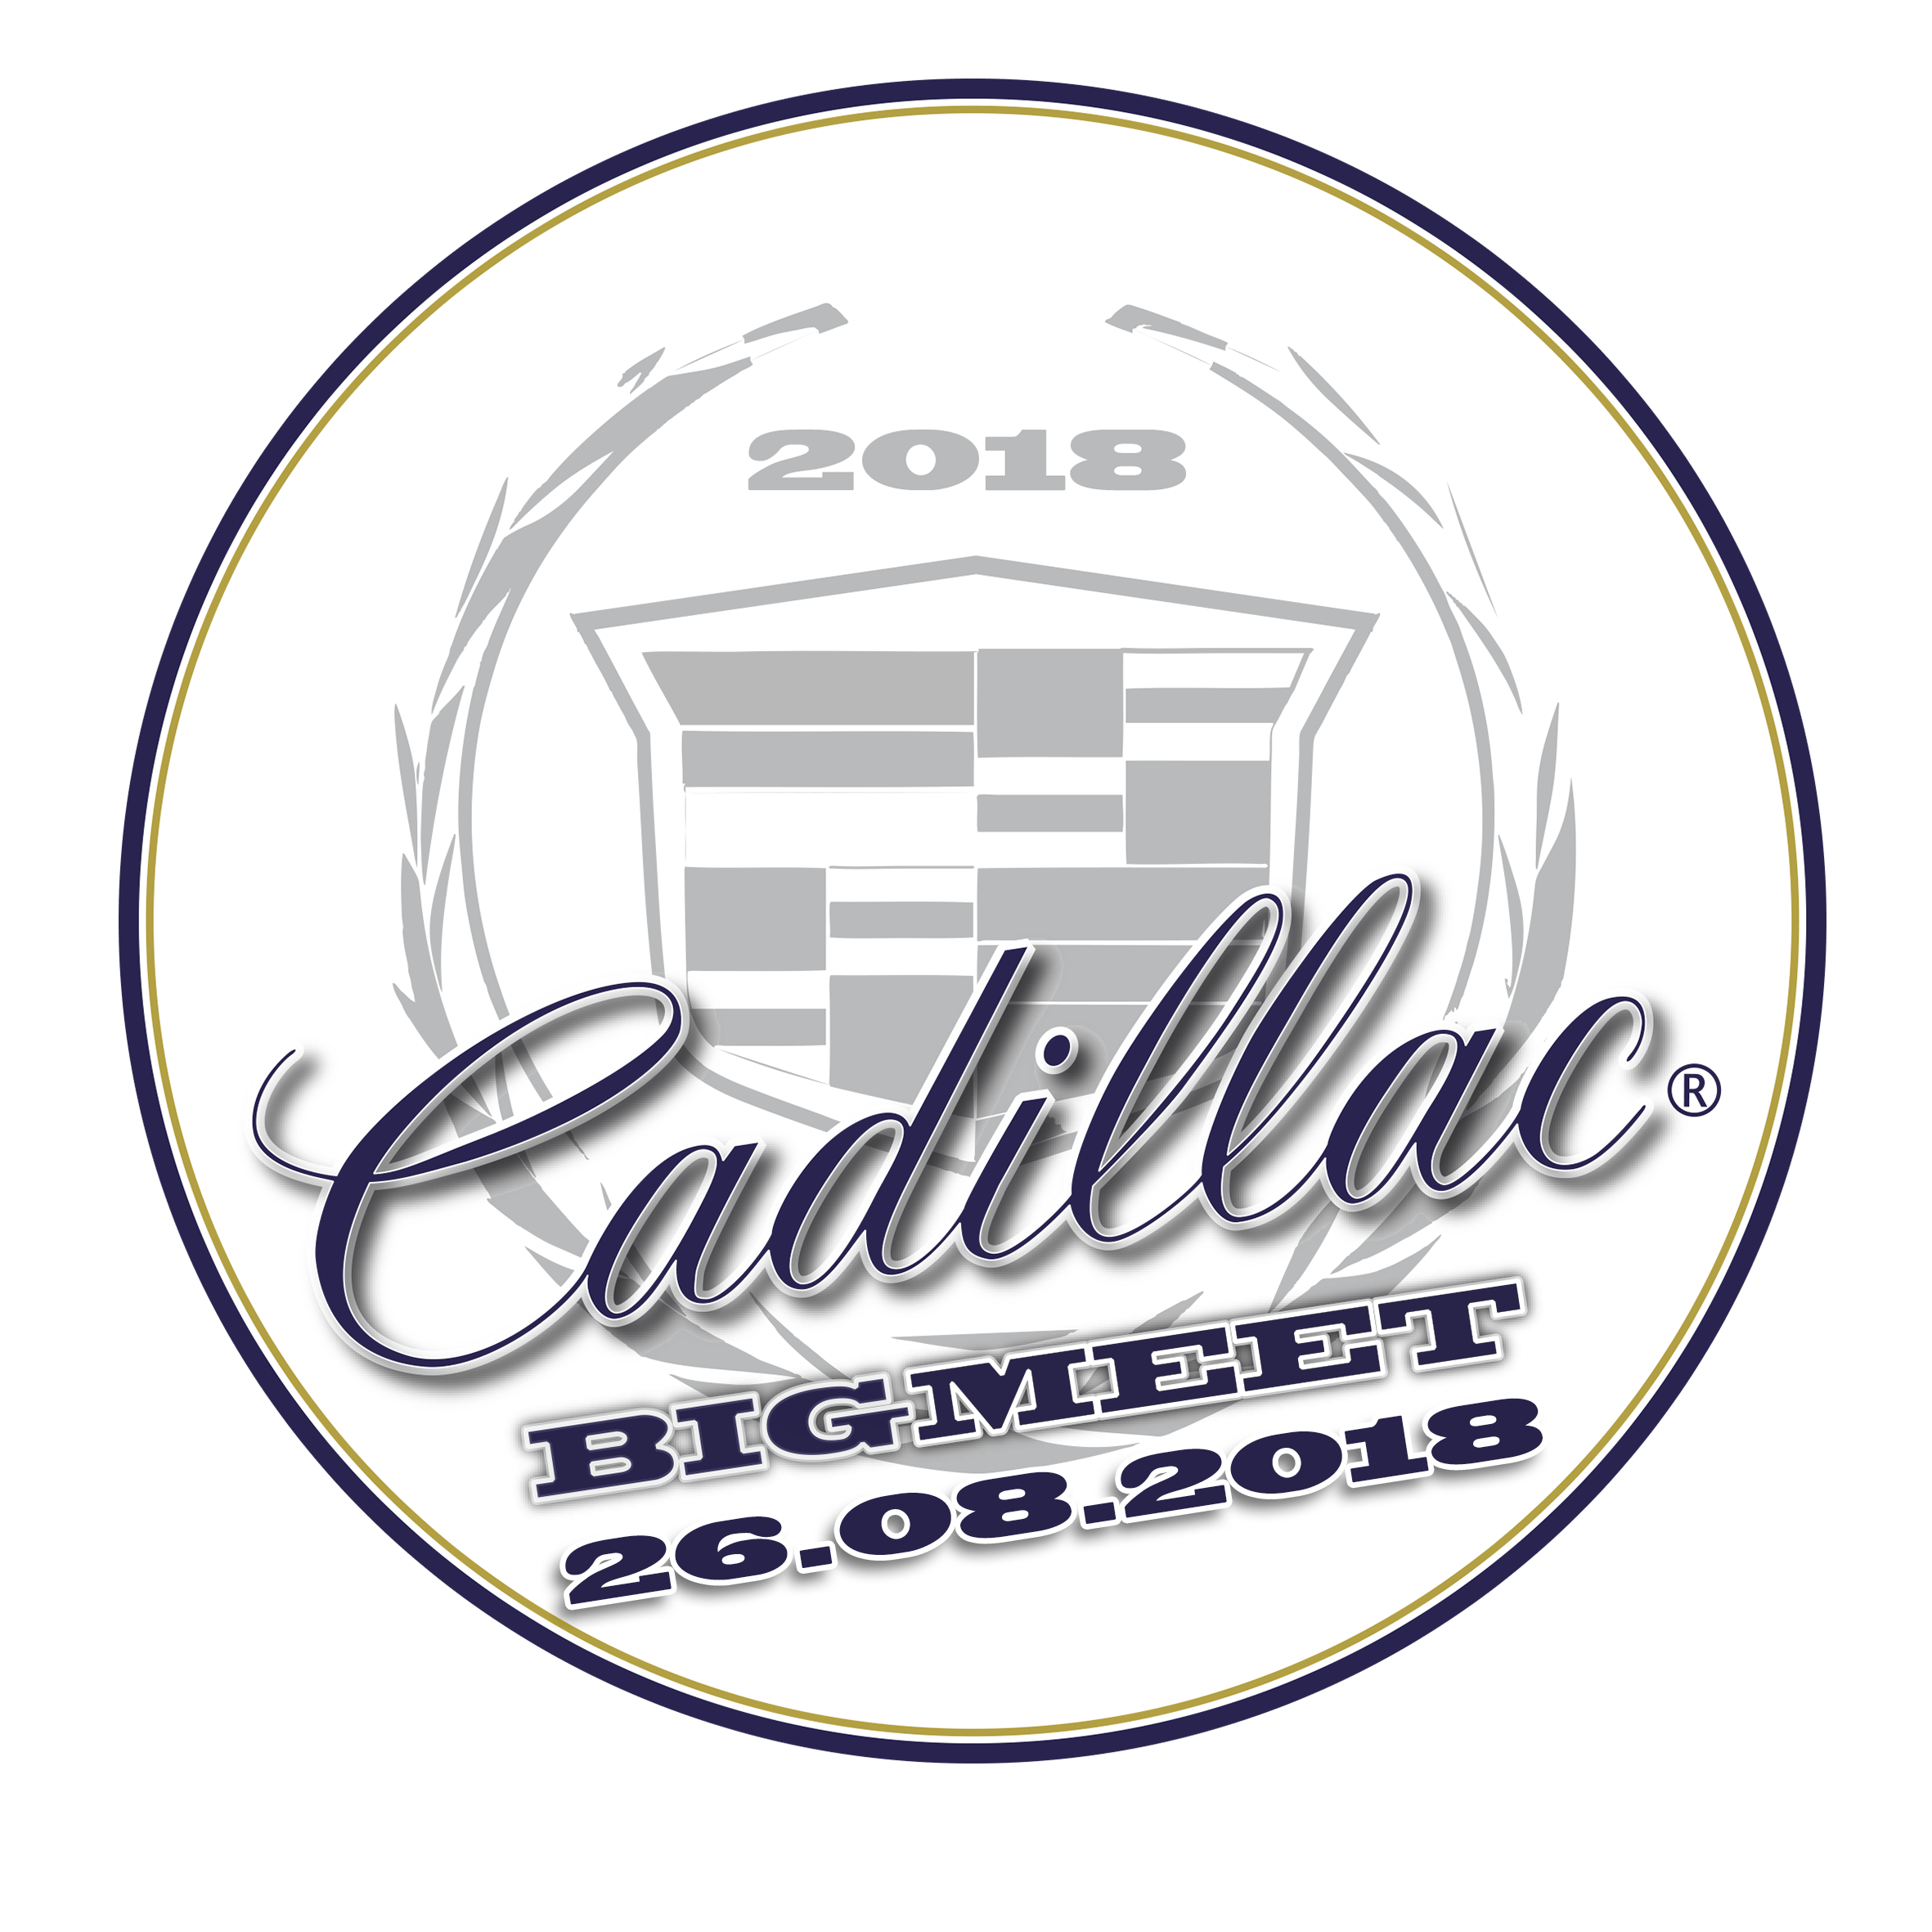 Big Cadillac Logo - CBM 2016 - Press